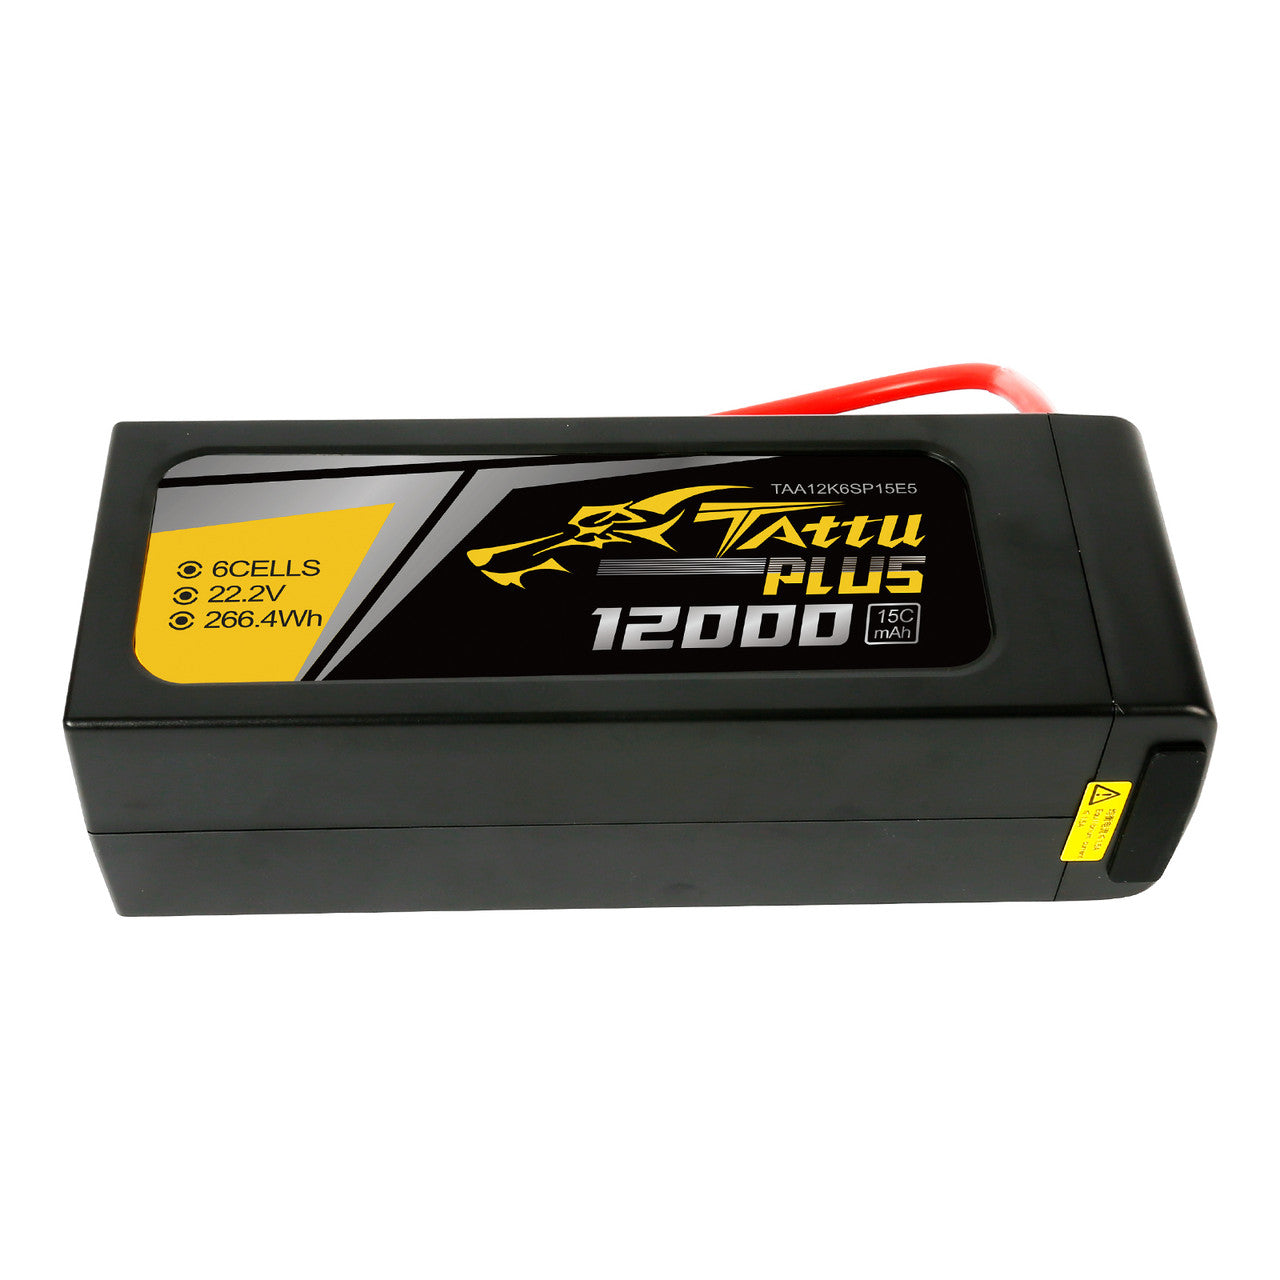 High-capacity Tattu smart LiPo battery pack with 12,000mAh capacity, suitable for RC models.